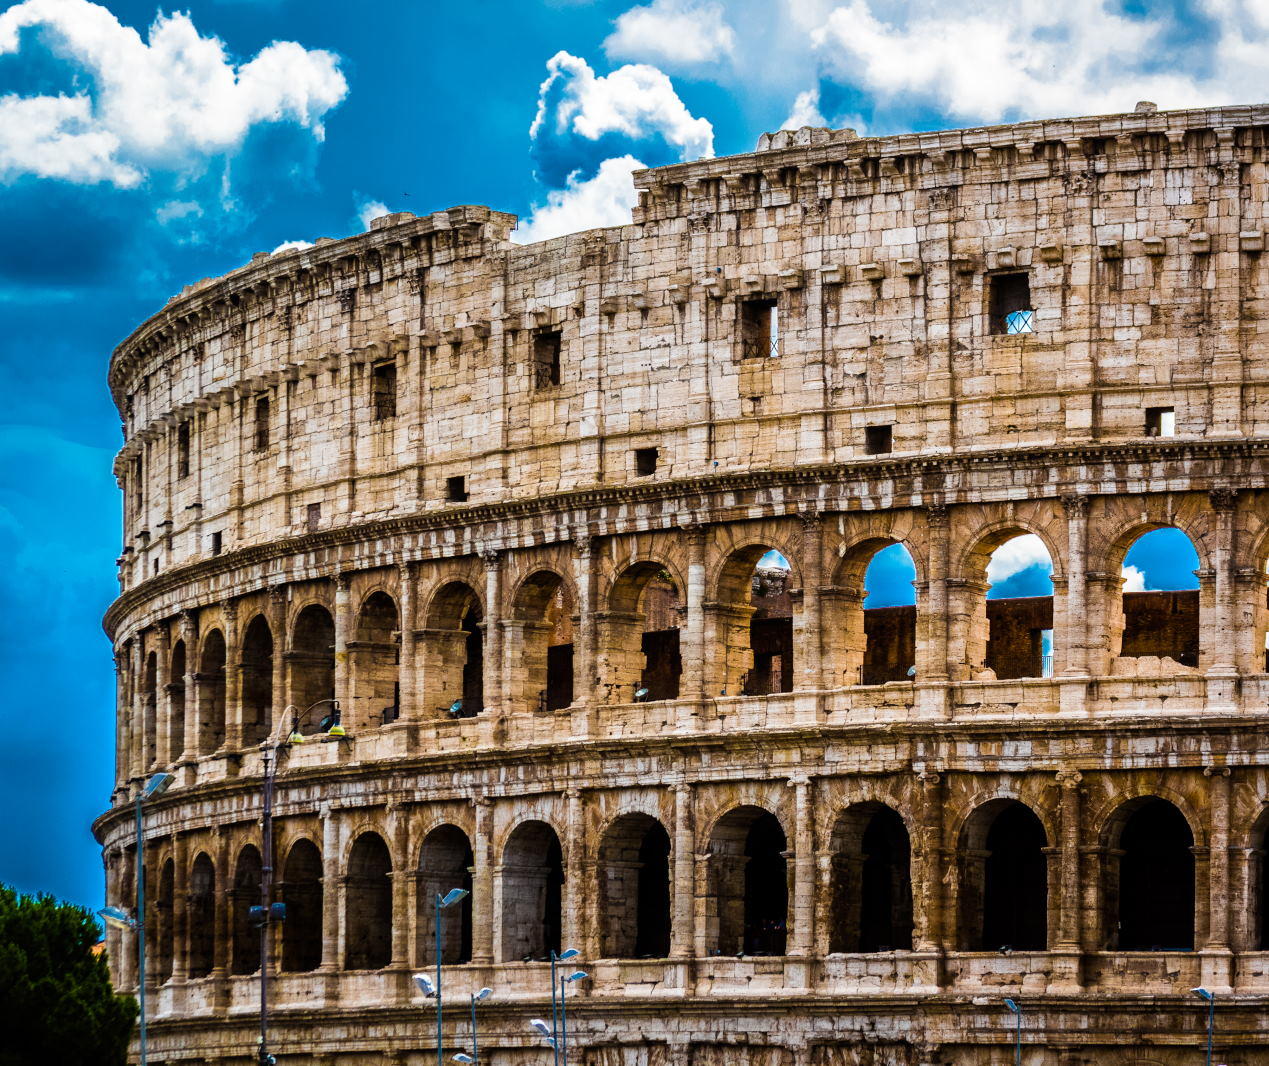 Colosseum history pdf torrent samuli kaikkonen elitetorrent